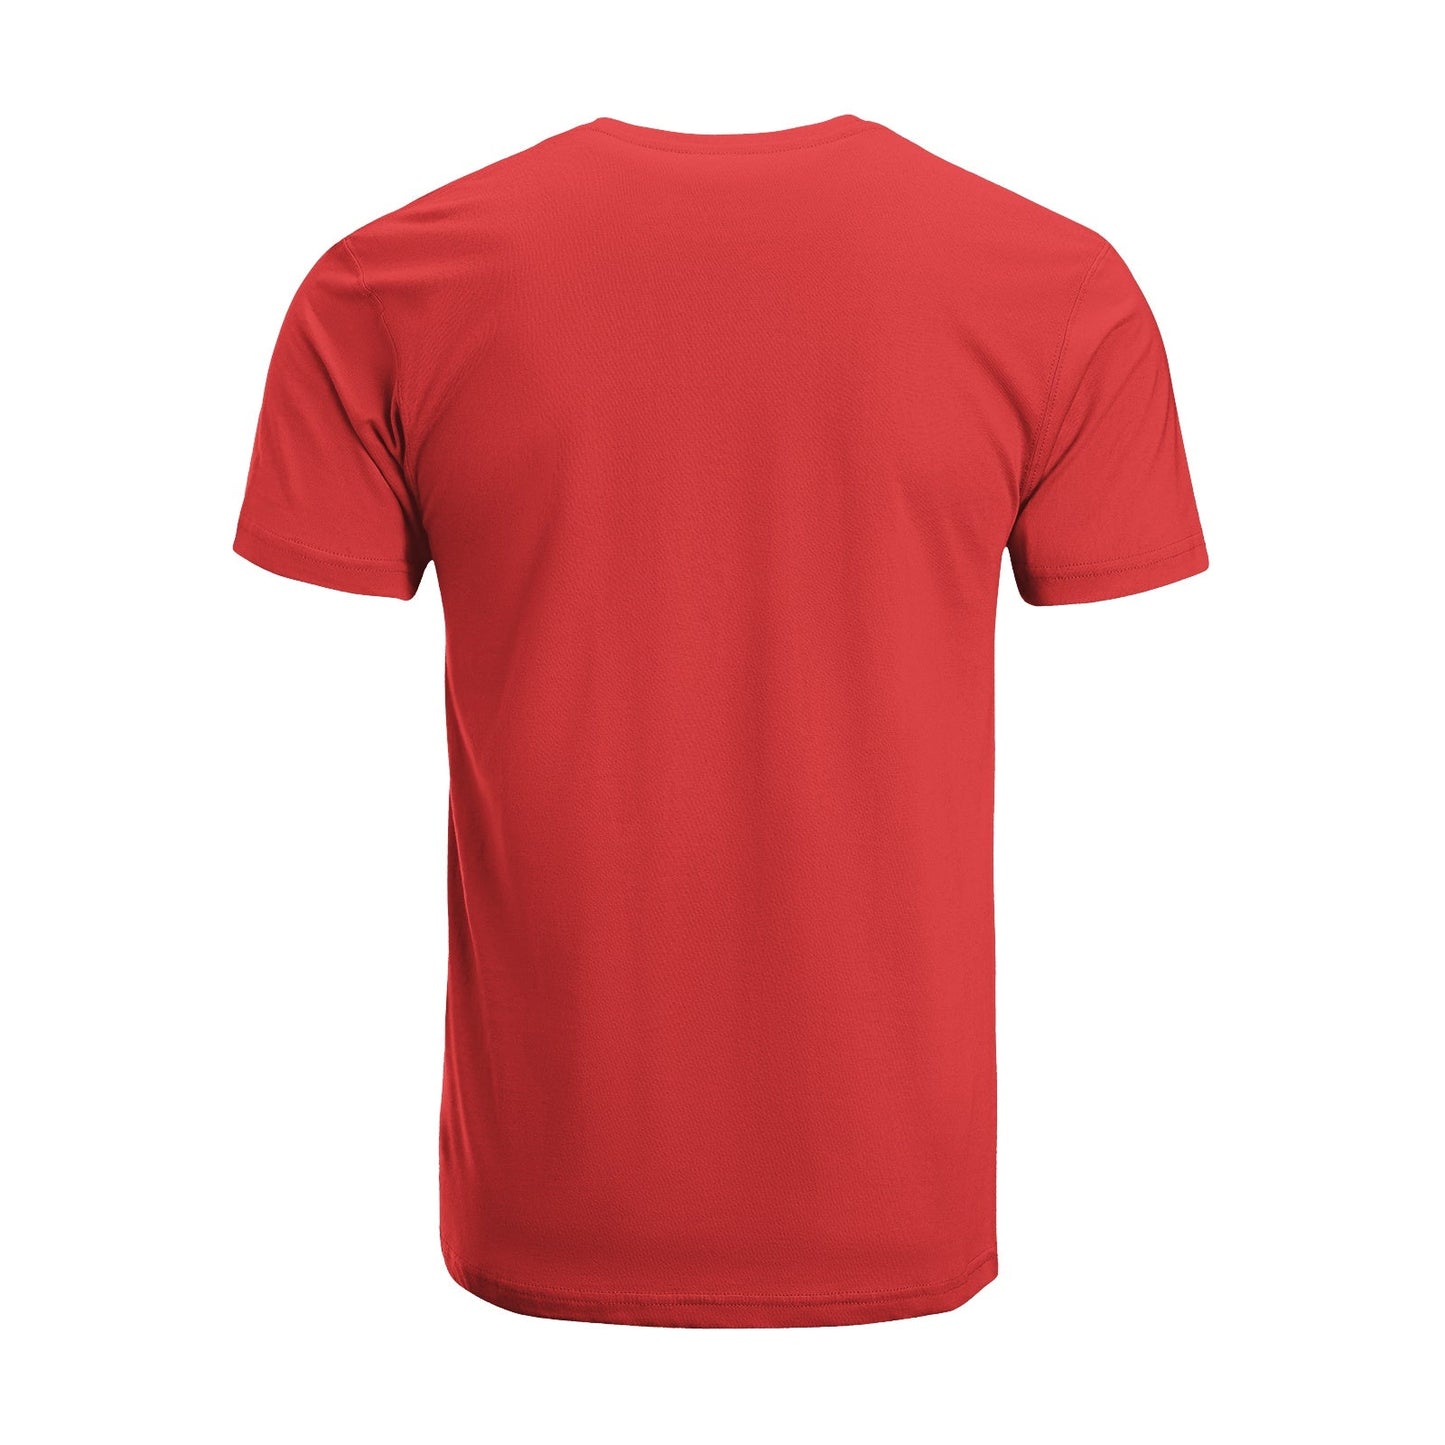 Unisex Short Sleeve Crew Neck Cotton Jersey T-Shirt MOM 36